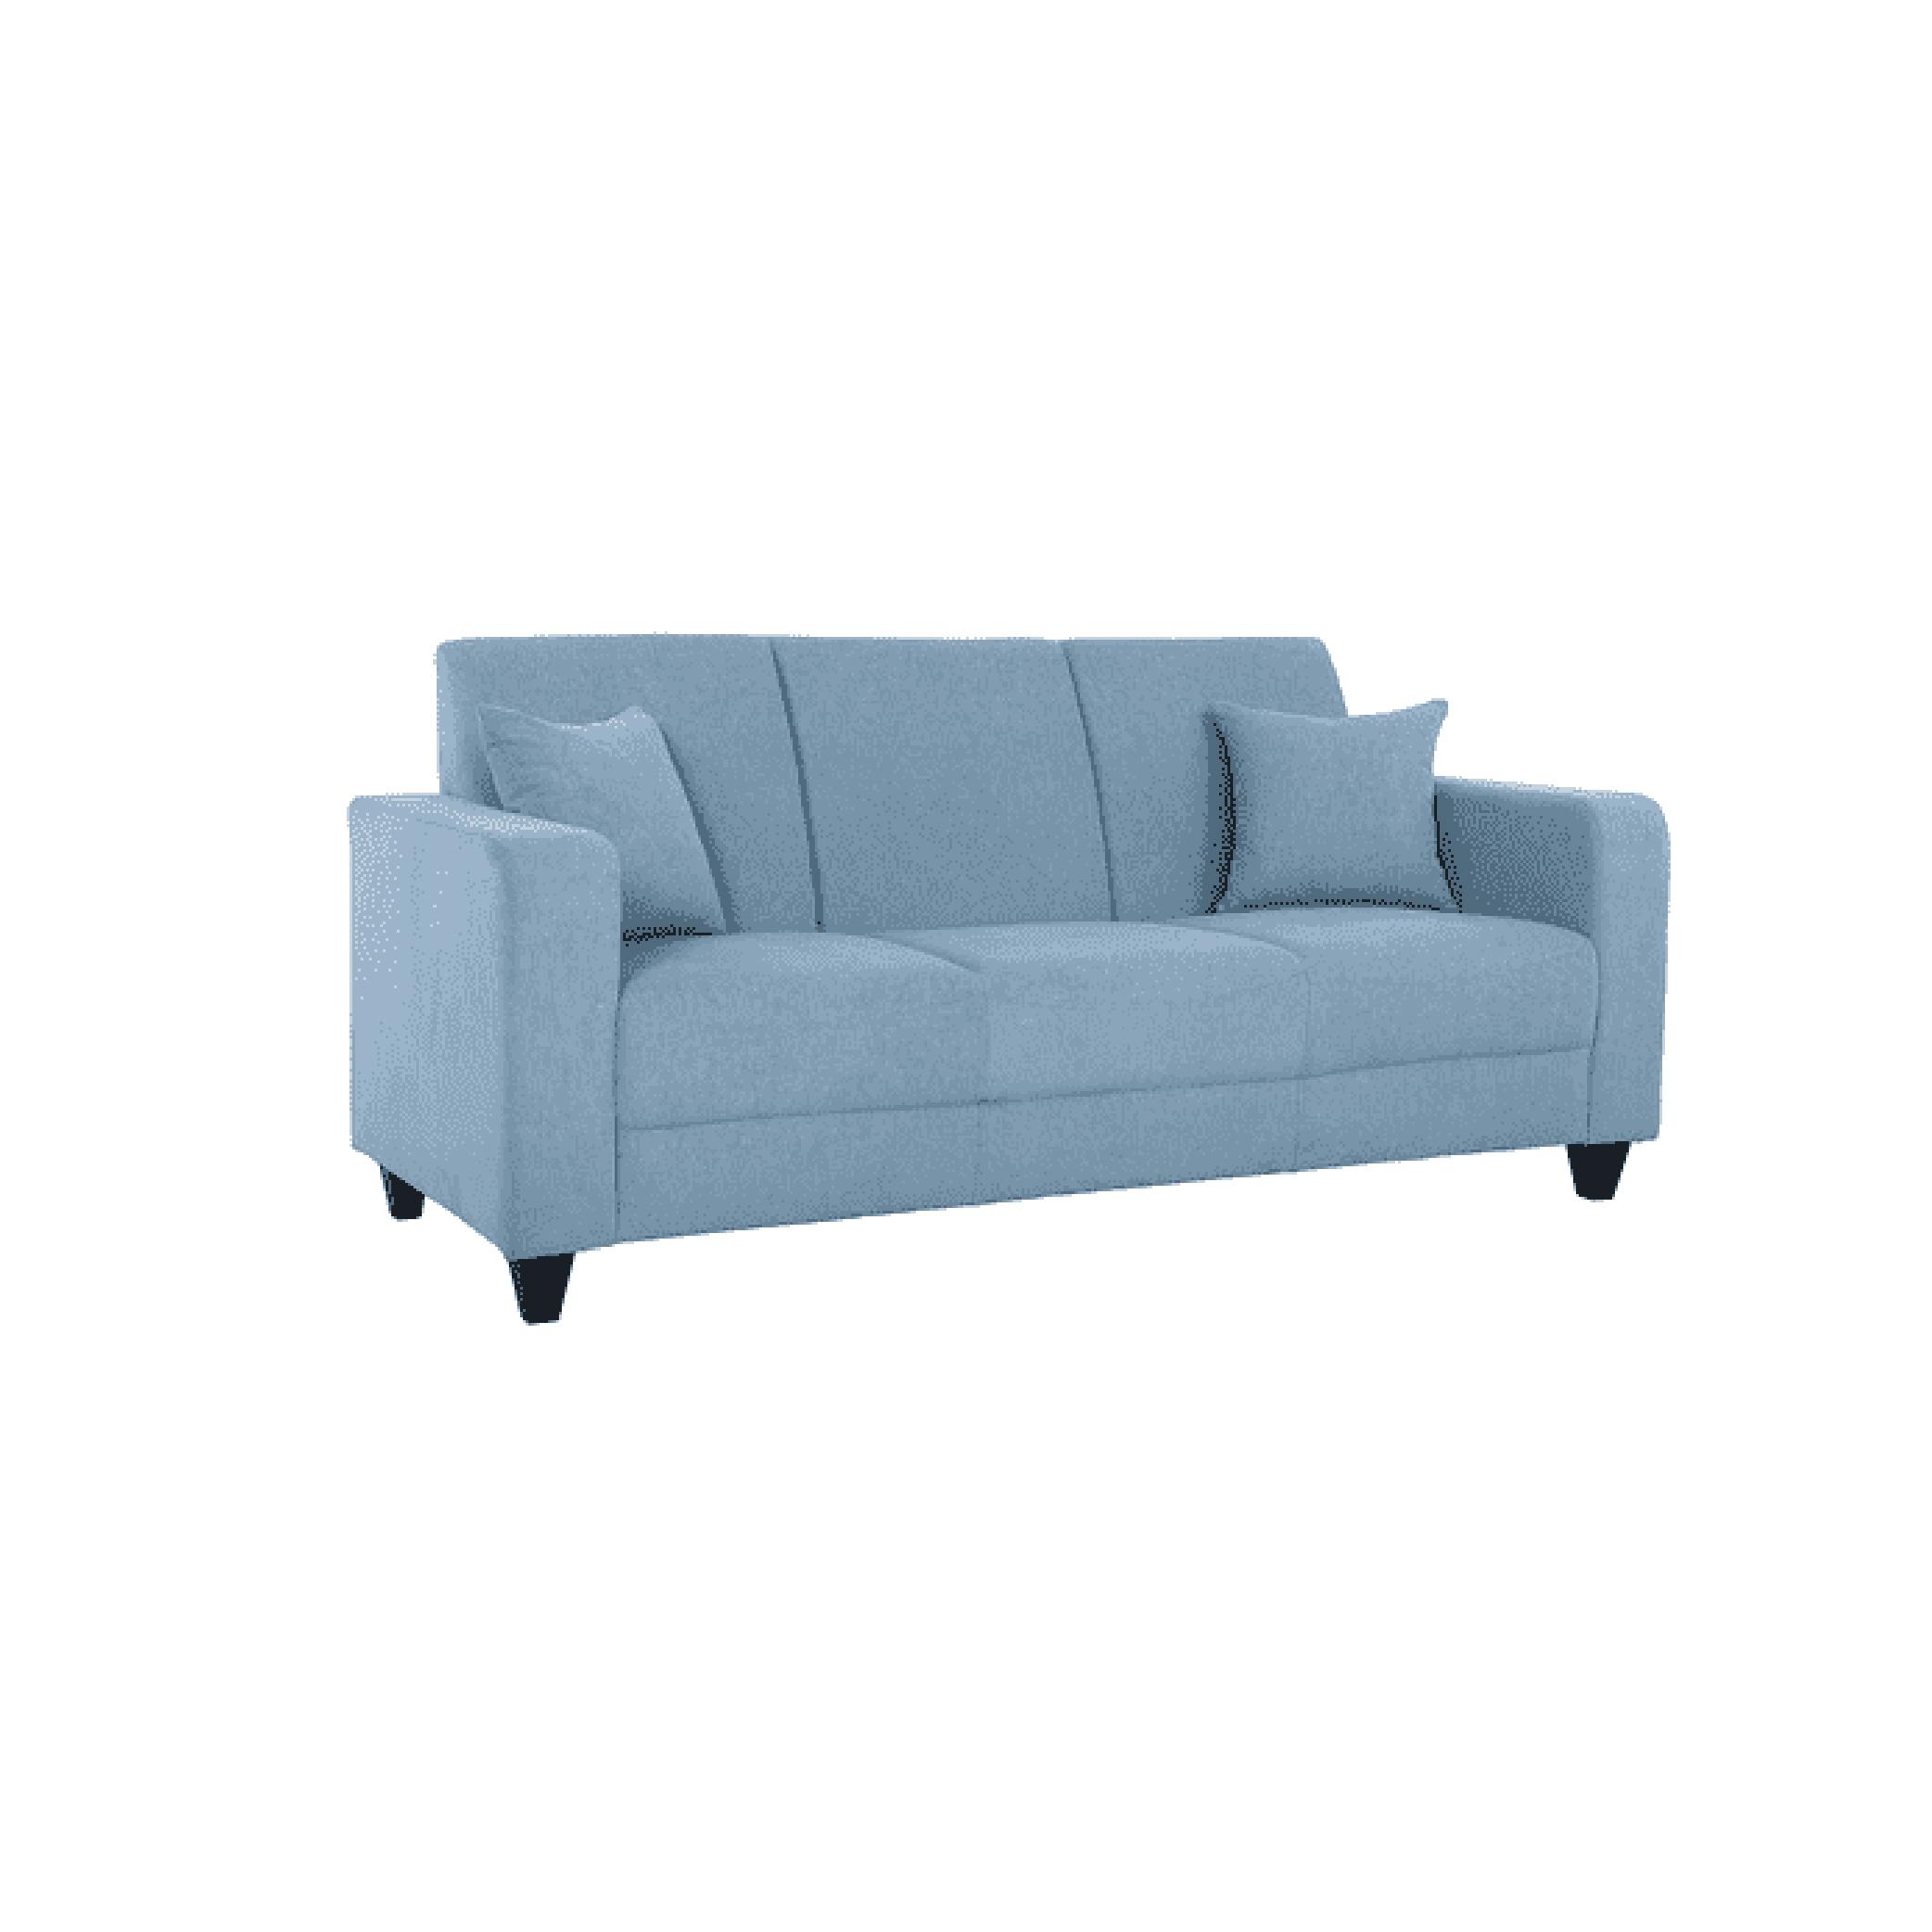 Naples Three Seater Sofa in Ice Blue Colour